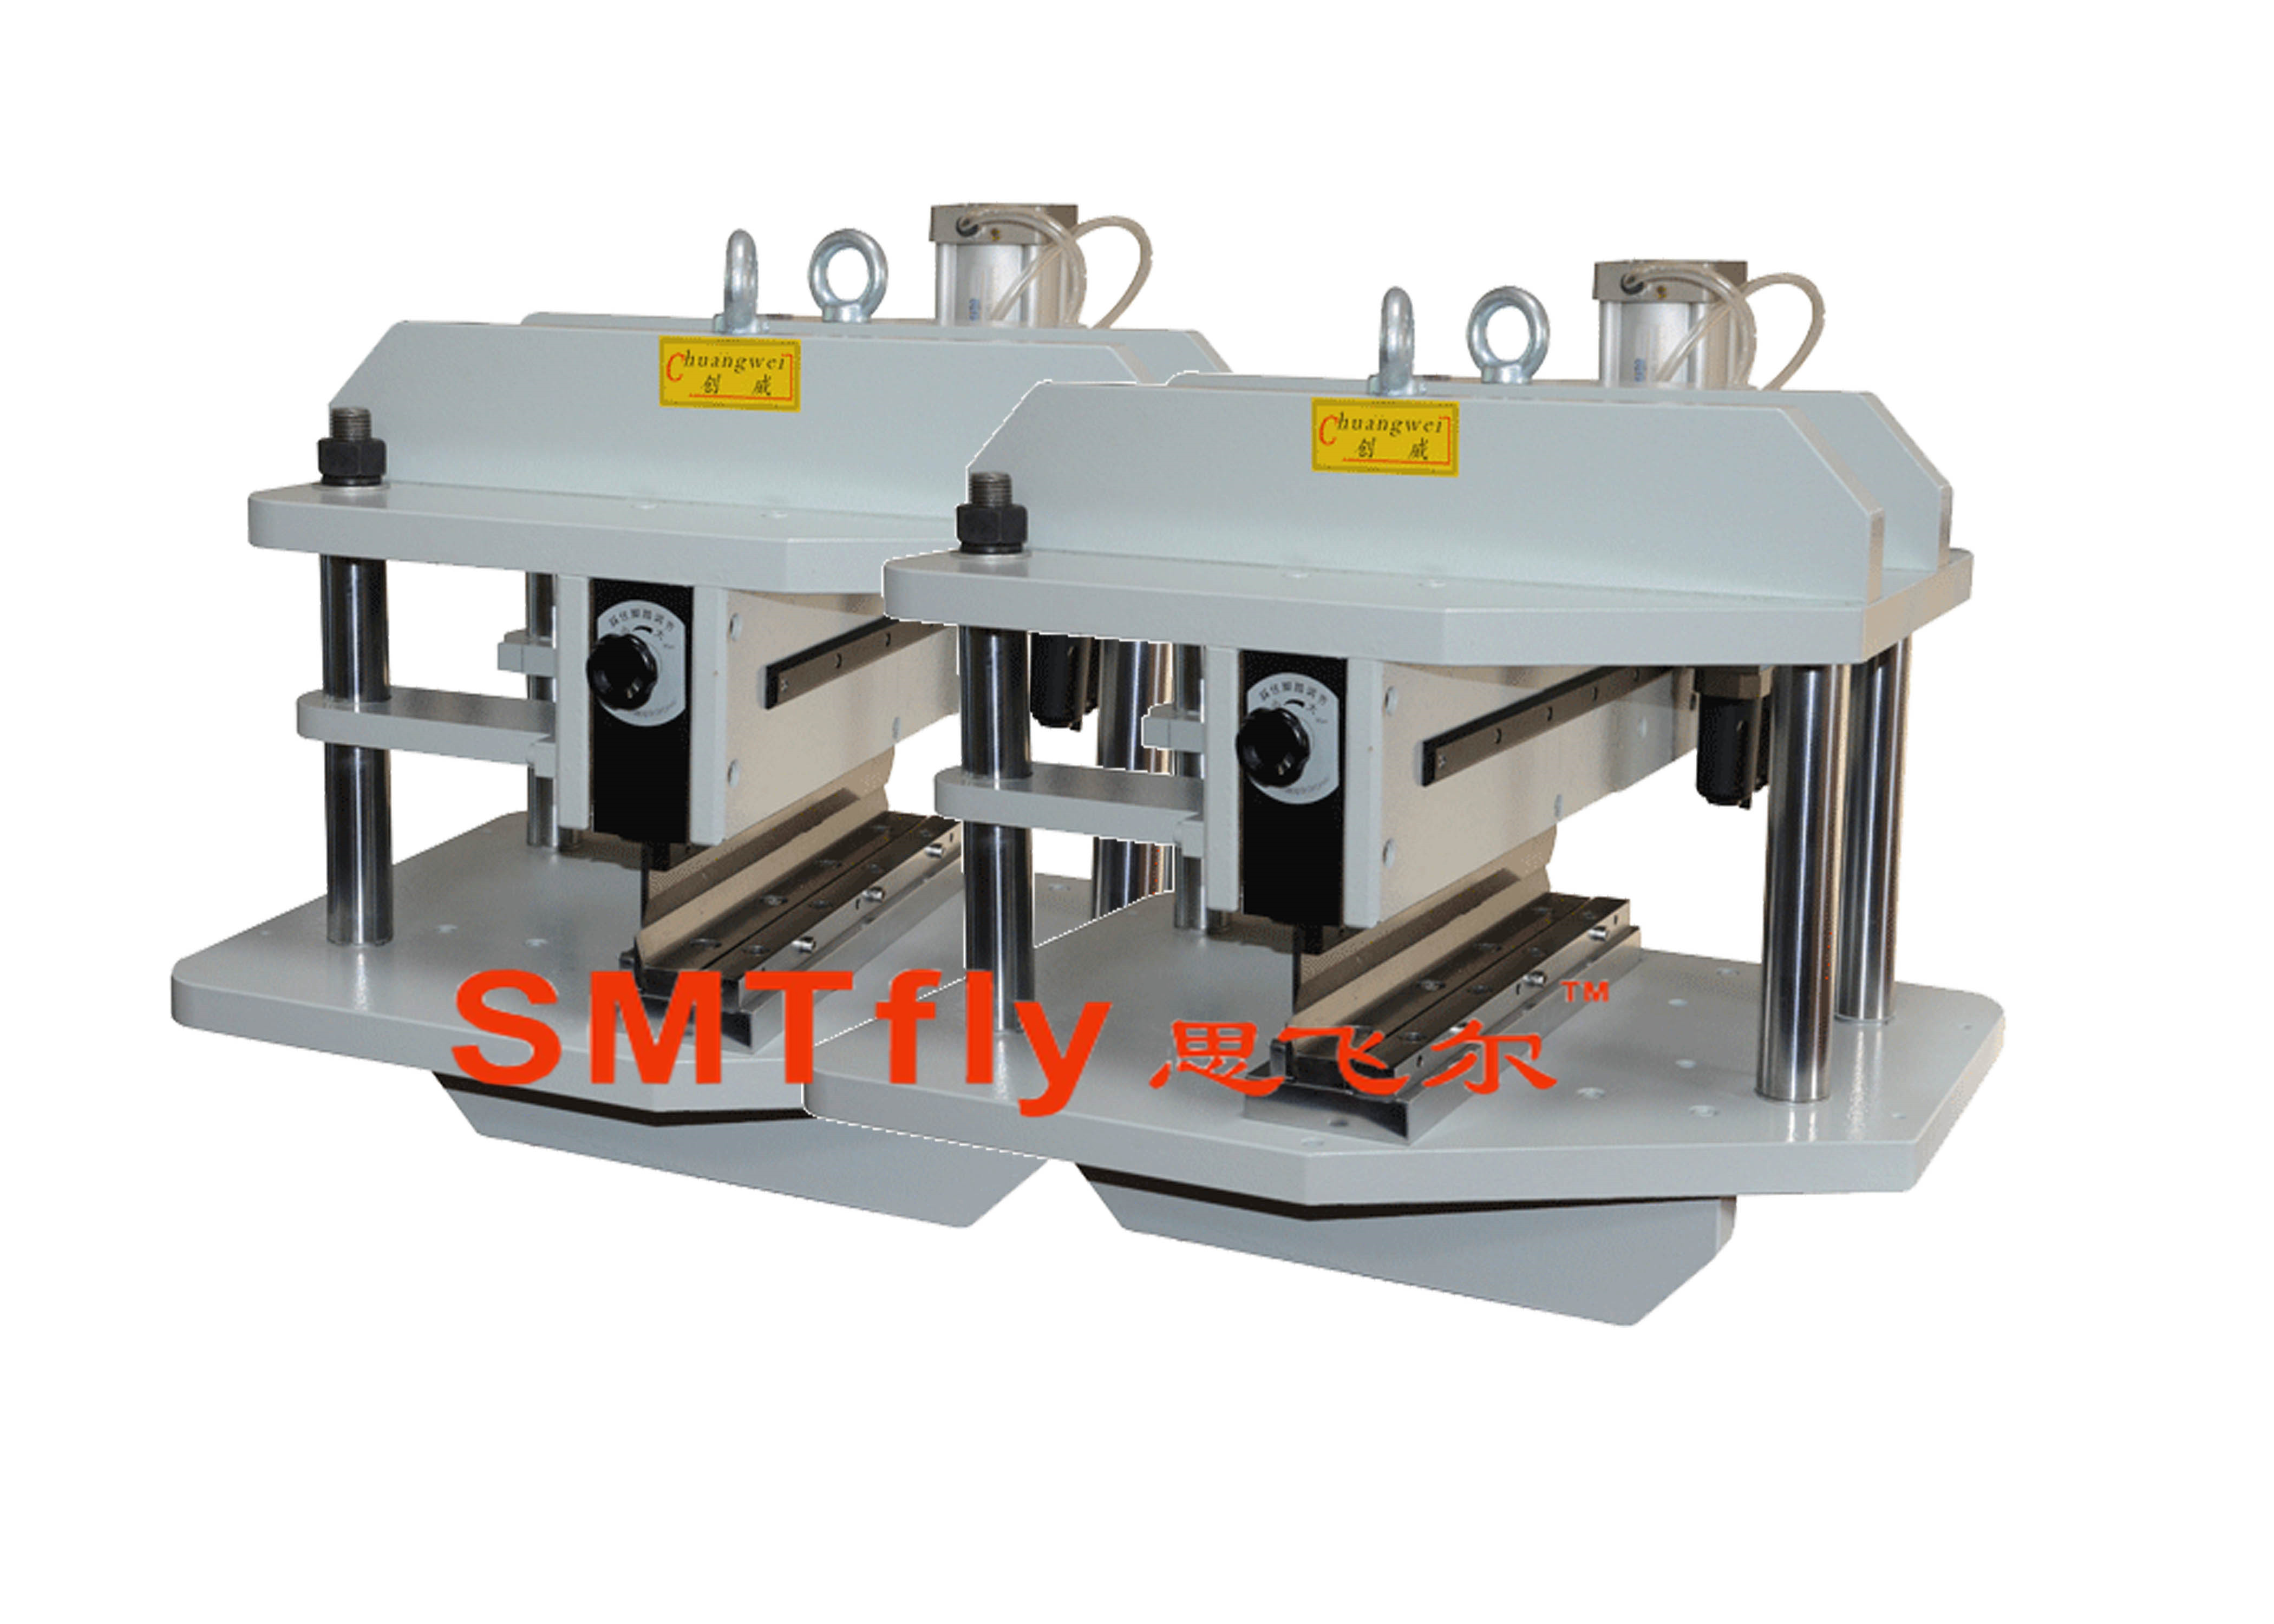 PCB Board Guillotine Cutting Machine,SMTfly-450C